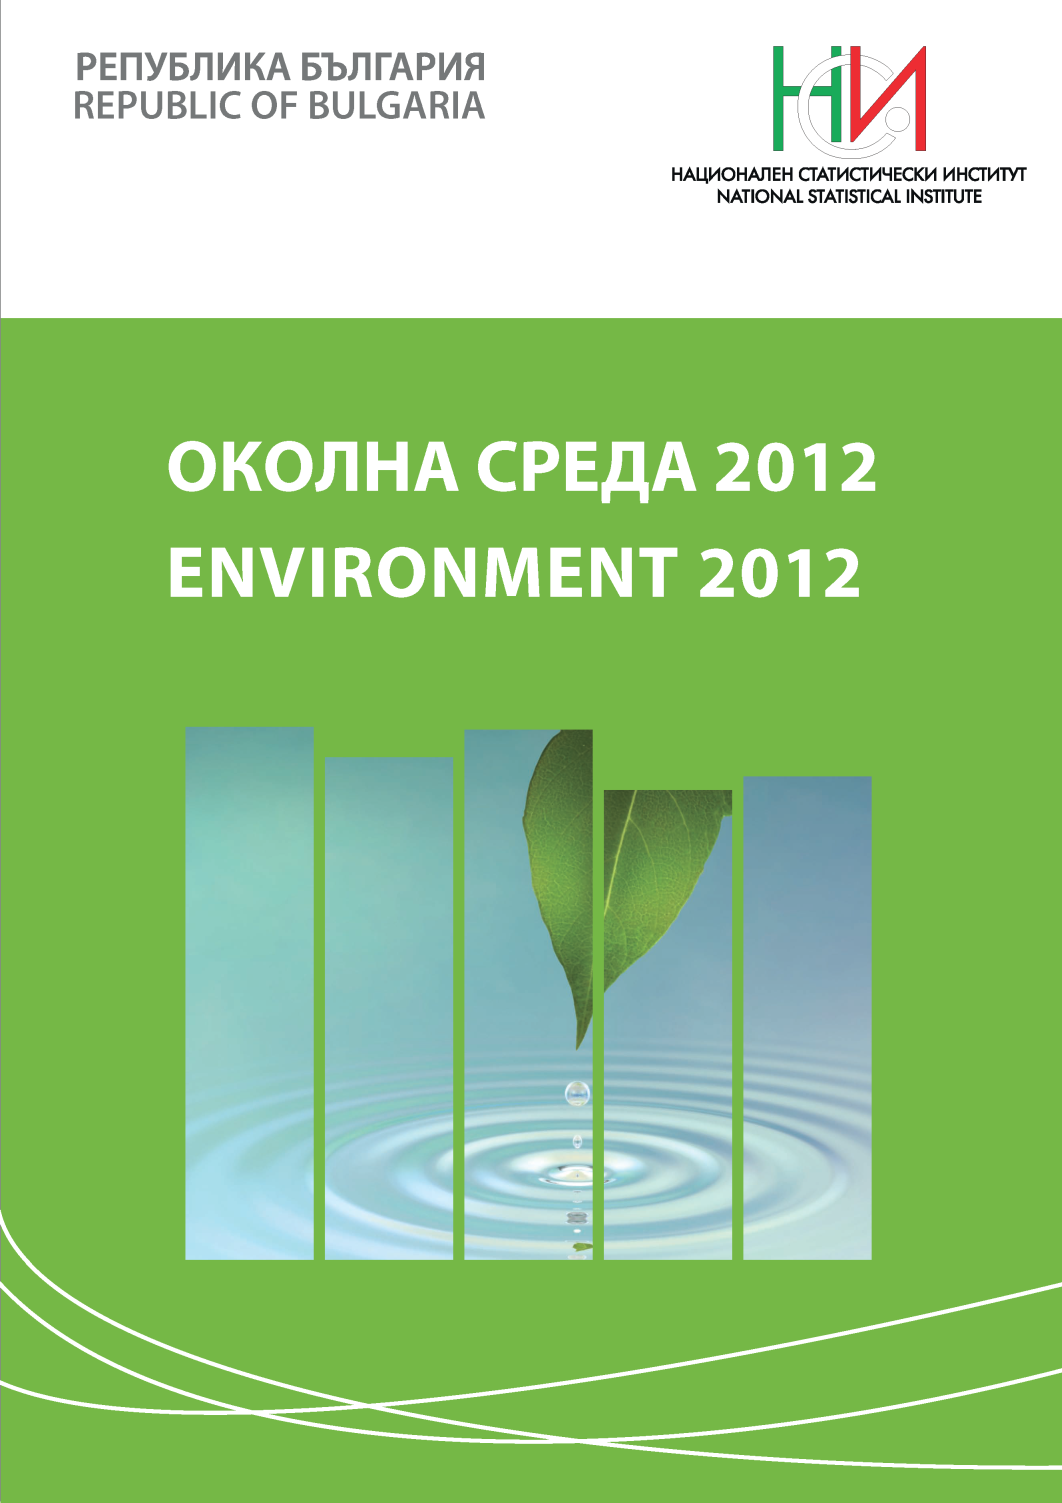 Environment 2012